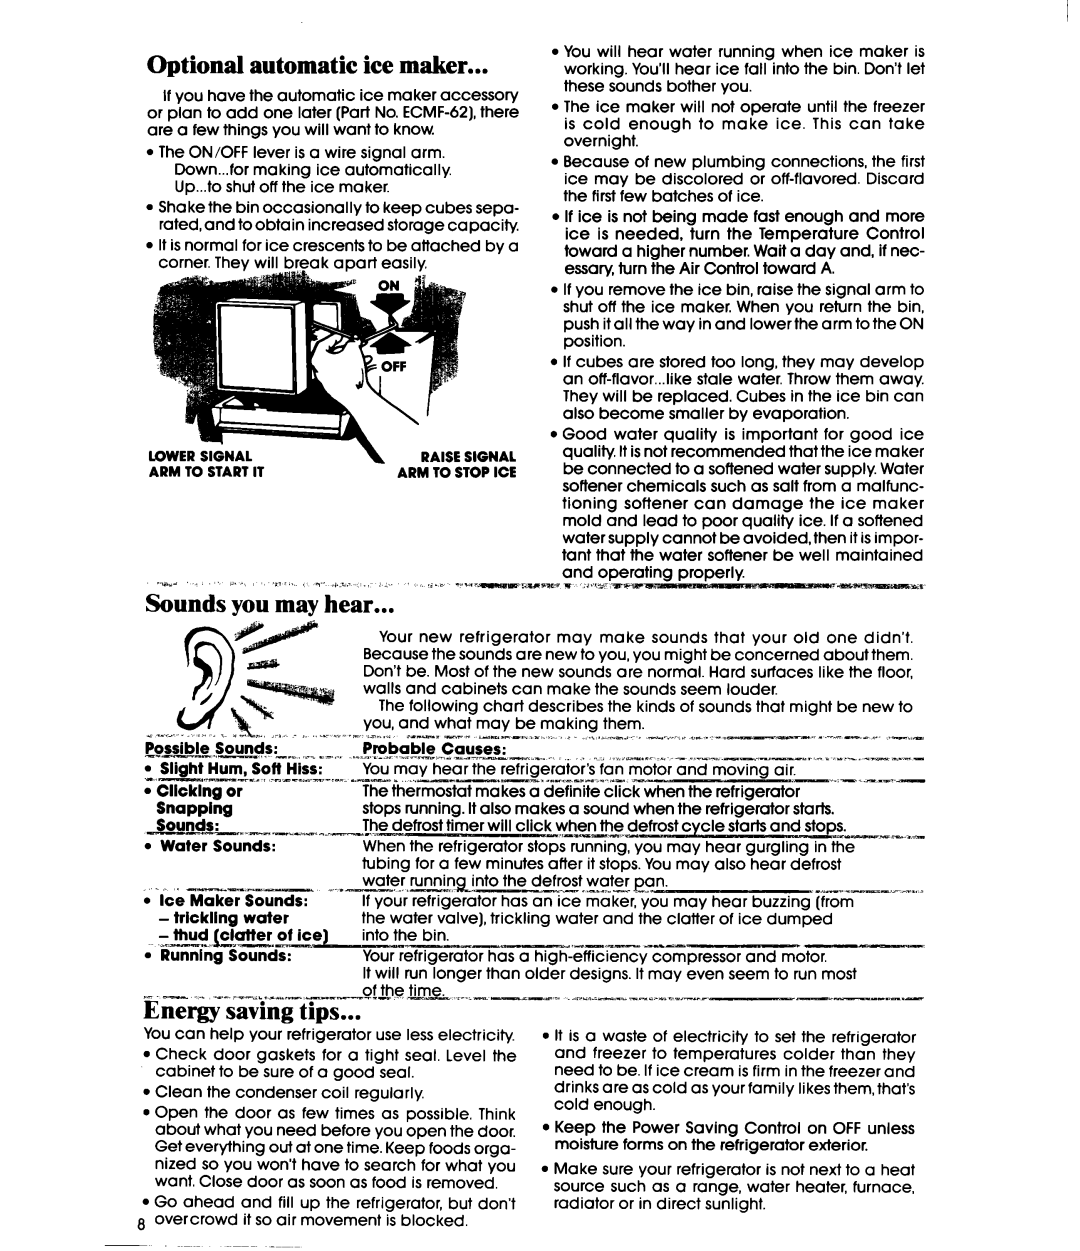 Whirlpool EBI9MK manual Optional automatic ice maker, Energy saving tips, ~-----*Pi, n--r, v--v. .I.-M, I-~li, u c 